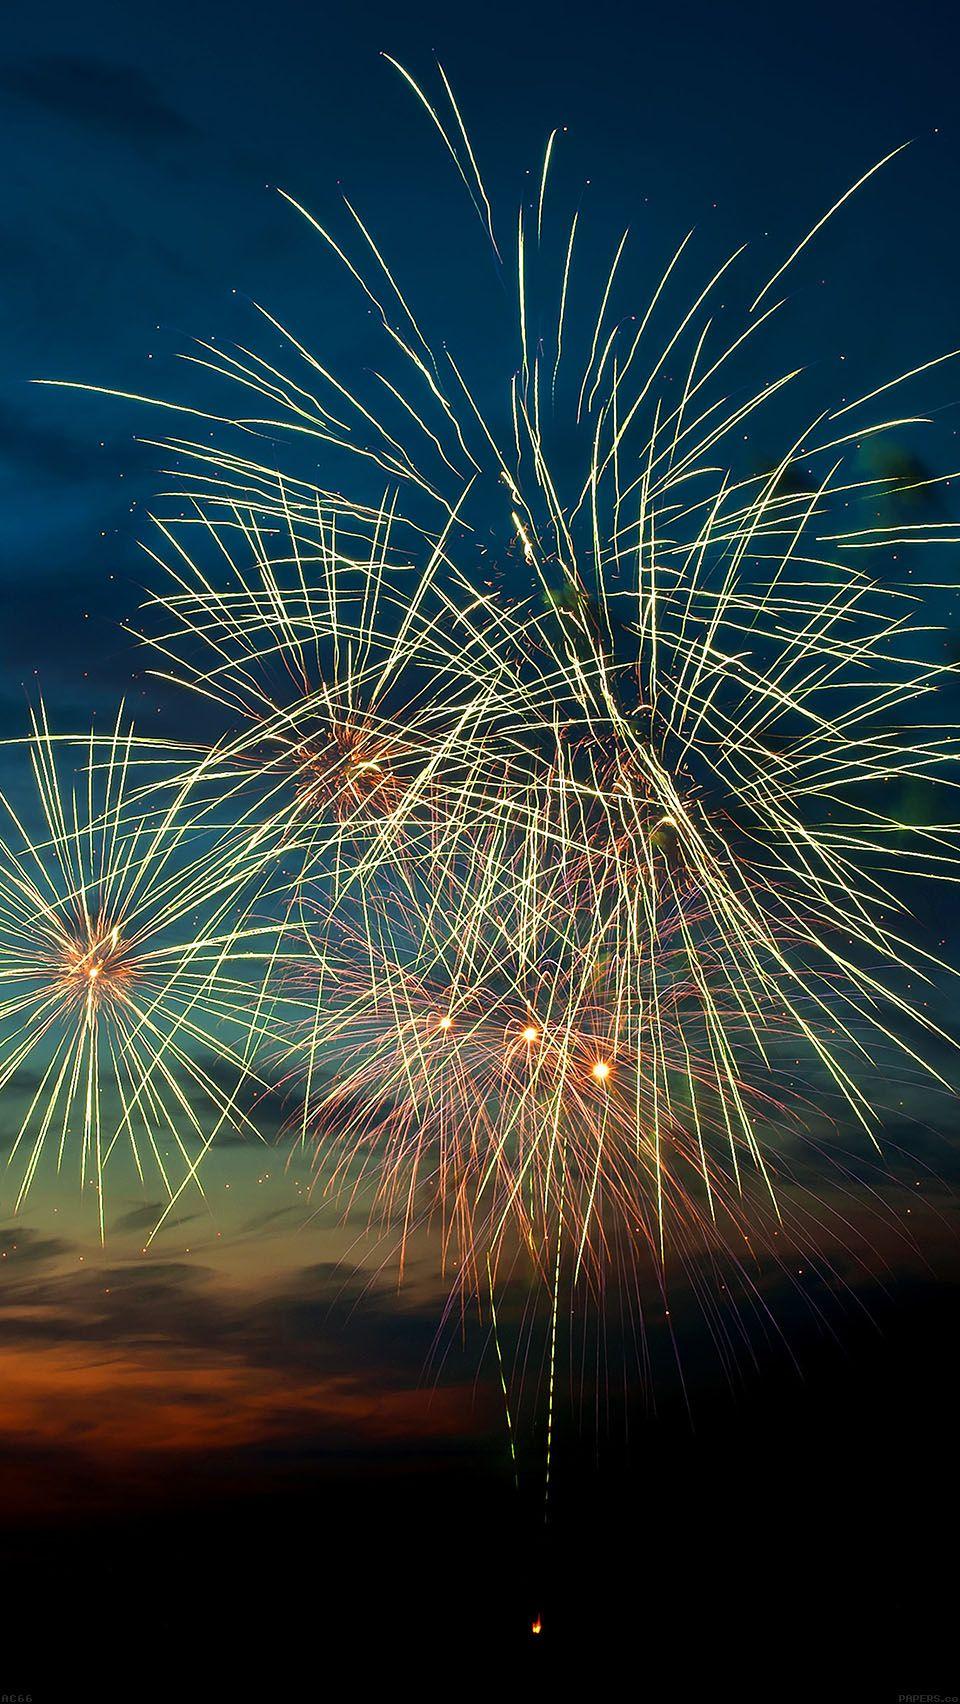 Fireworks Wallpaper iPhone 6. Sunset iphone wallpaper, Fireworks wallpaper iphone, Fireworks wallpaper